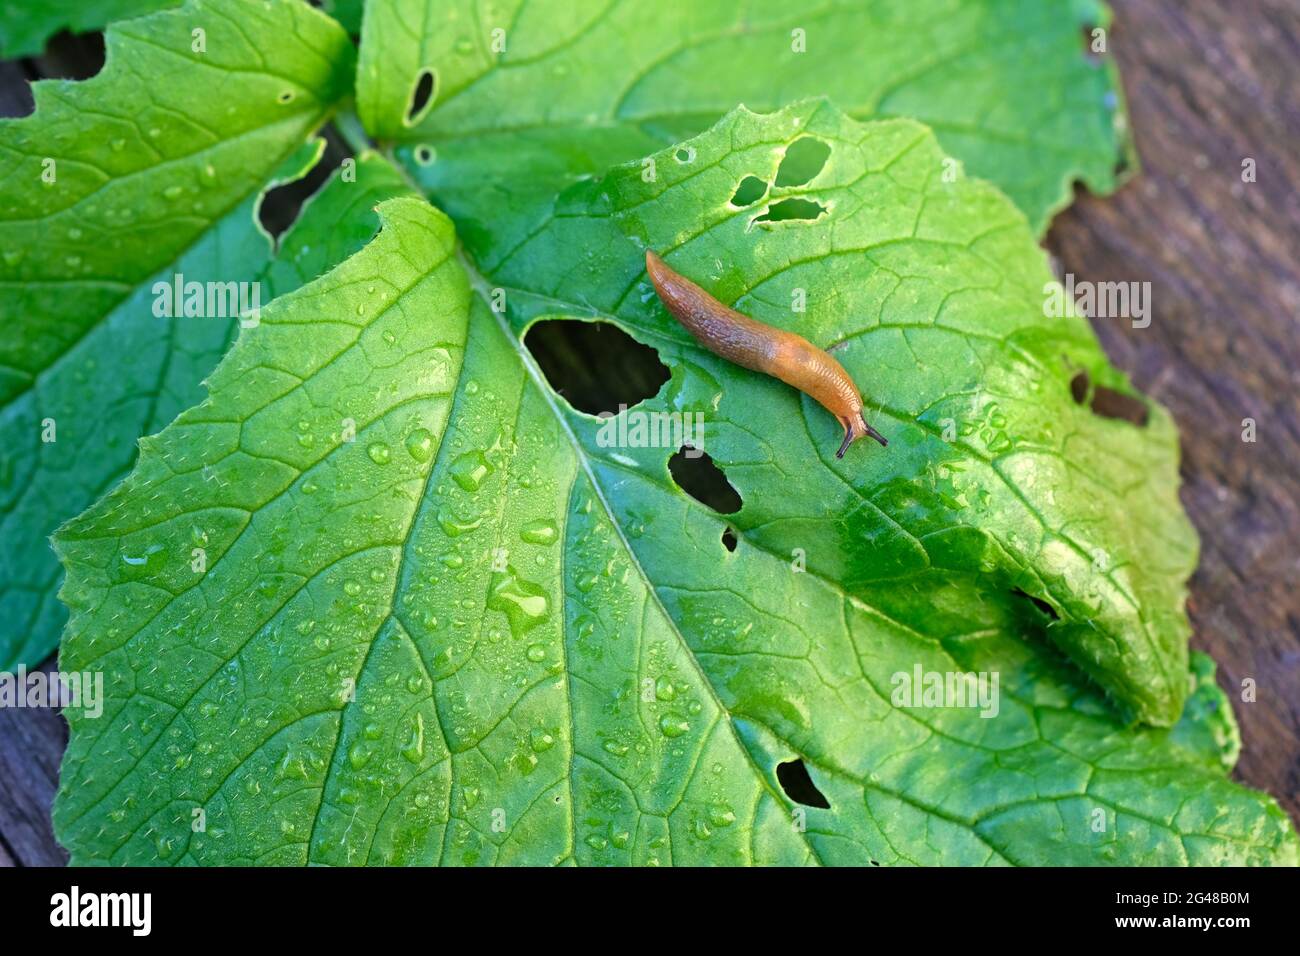 Arion lusitanicus close-up on damaged radish leaves. Brown slug on a green wet radish leaf top view. Stock Photo